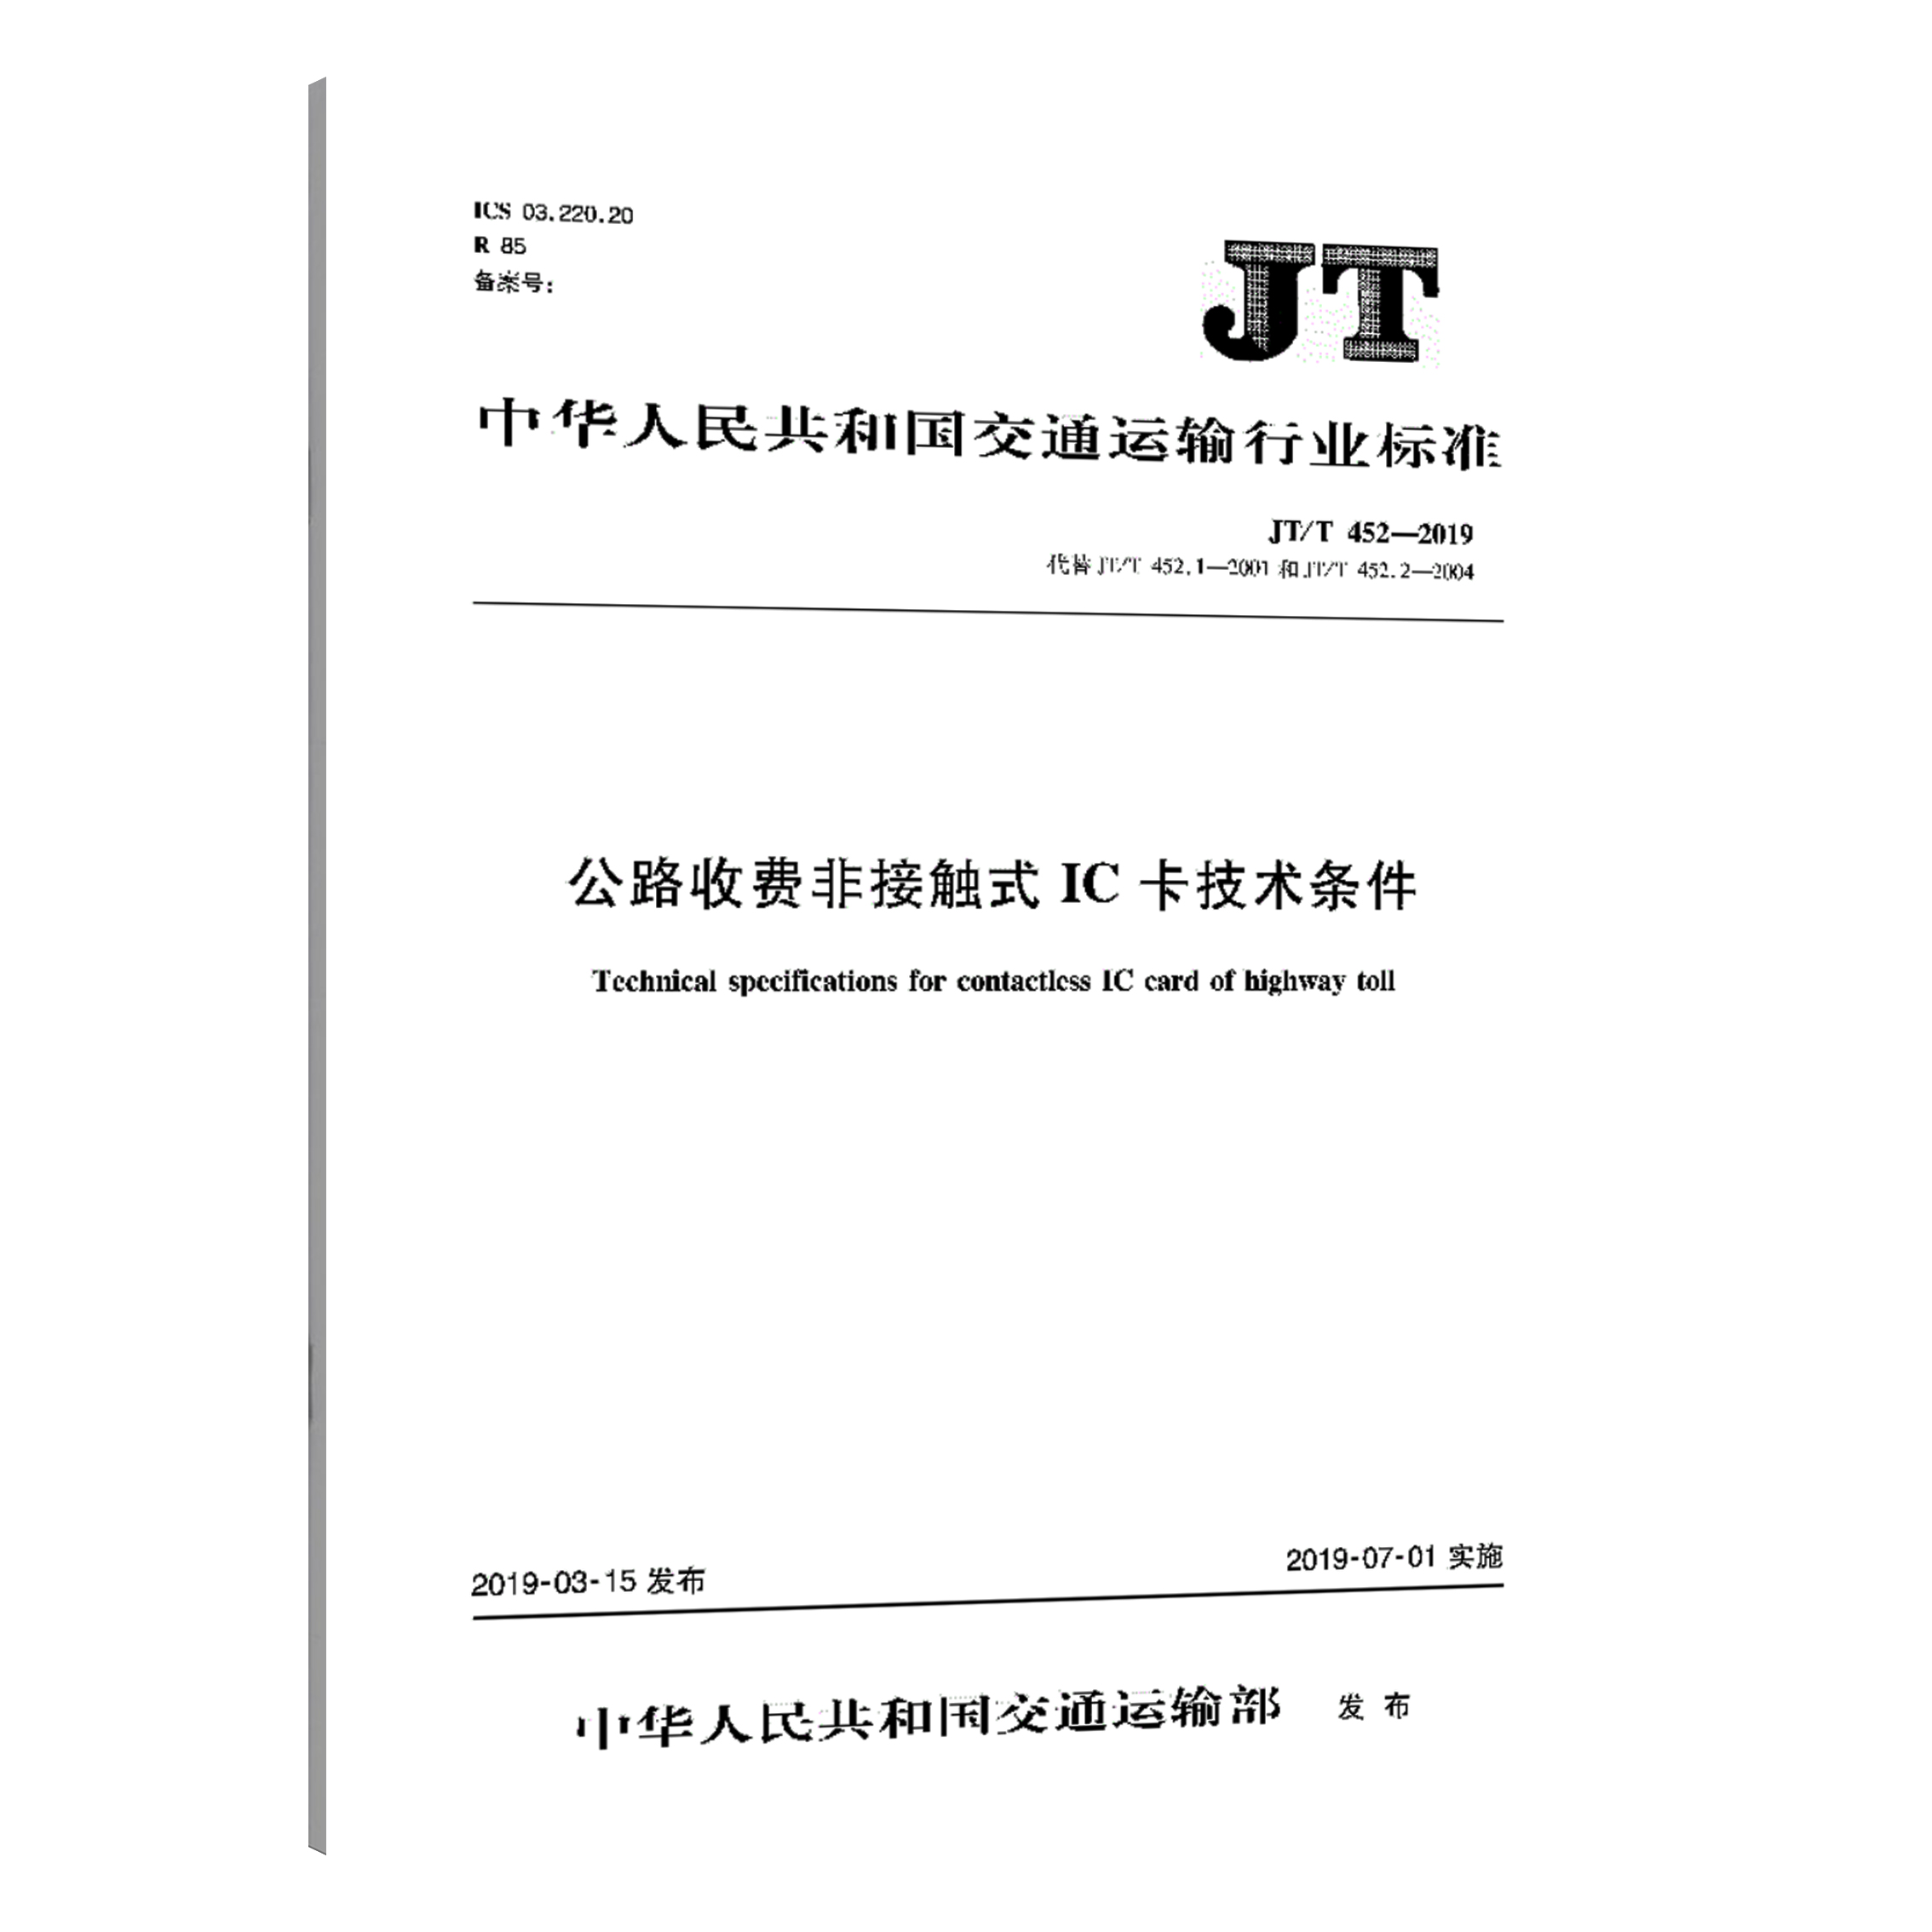 JT/T 452-2019 公路收费非接触式IC卡技术条件 代替 JT/T 452.1-2004、JT/T 452.2-2004 交通运输行业标准 人民交通出版社